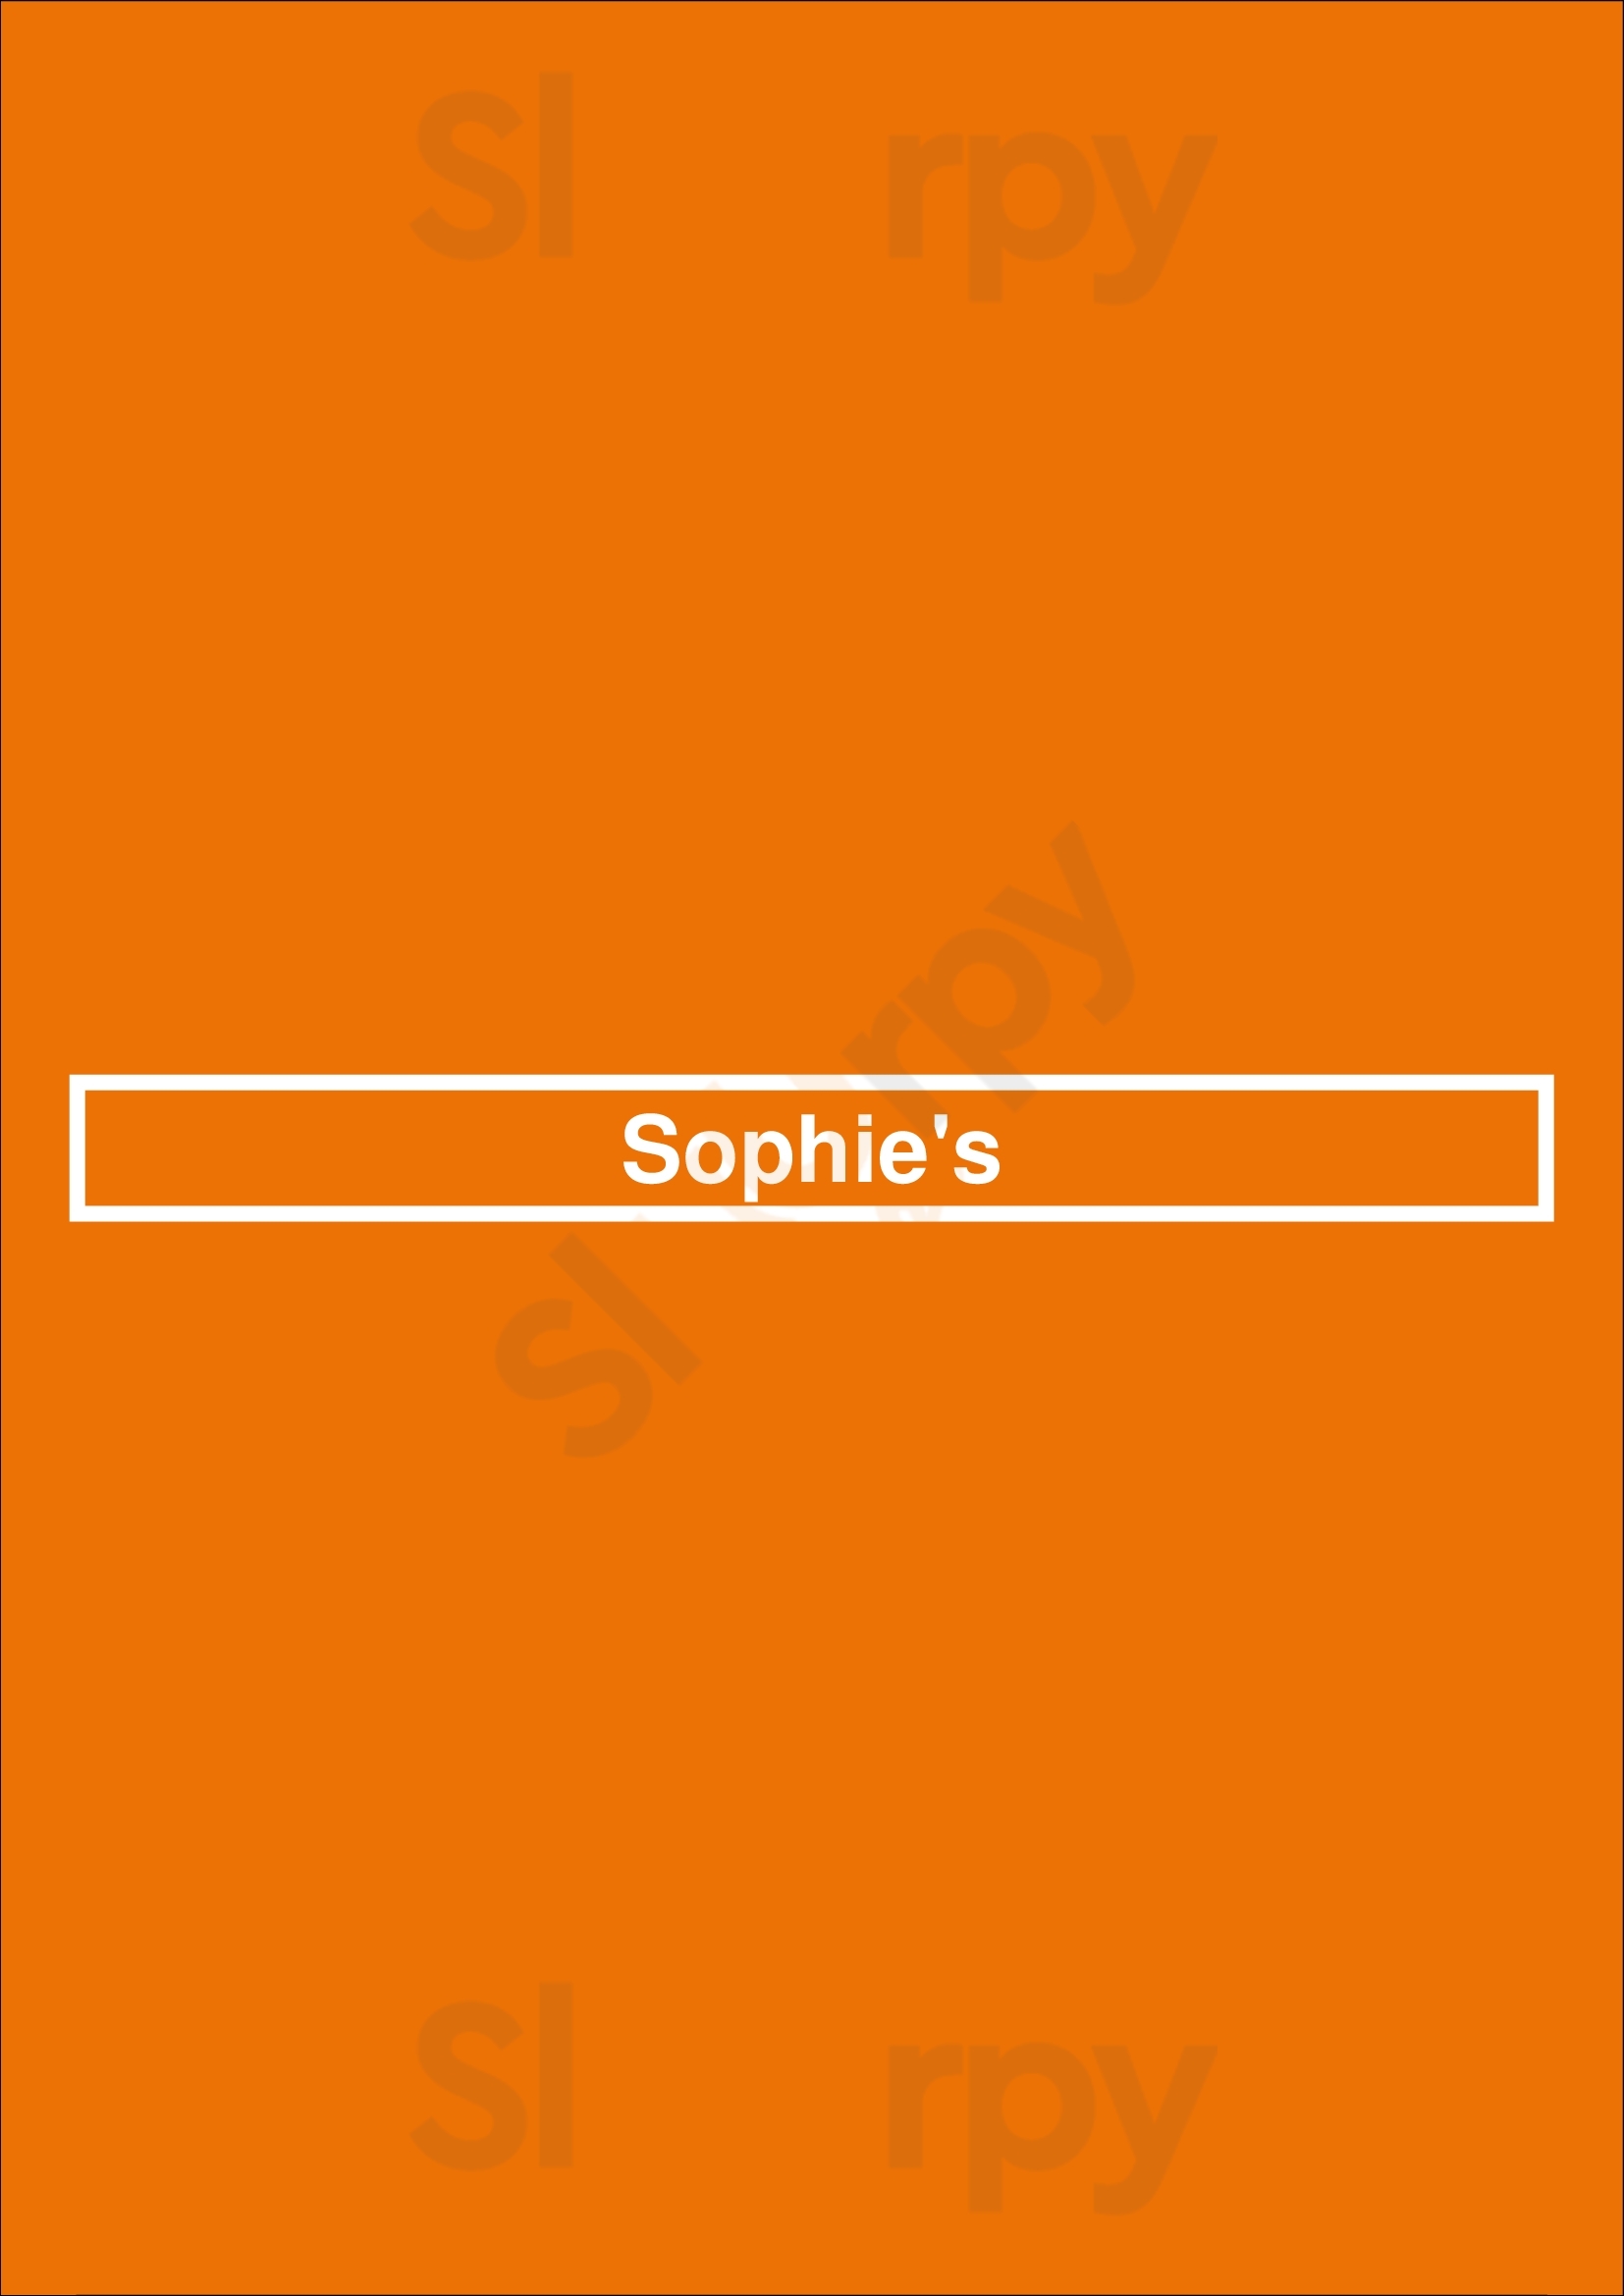 Sophie's Dublin Menu - 1